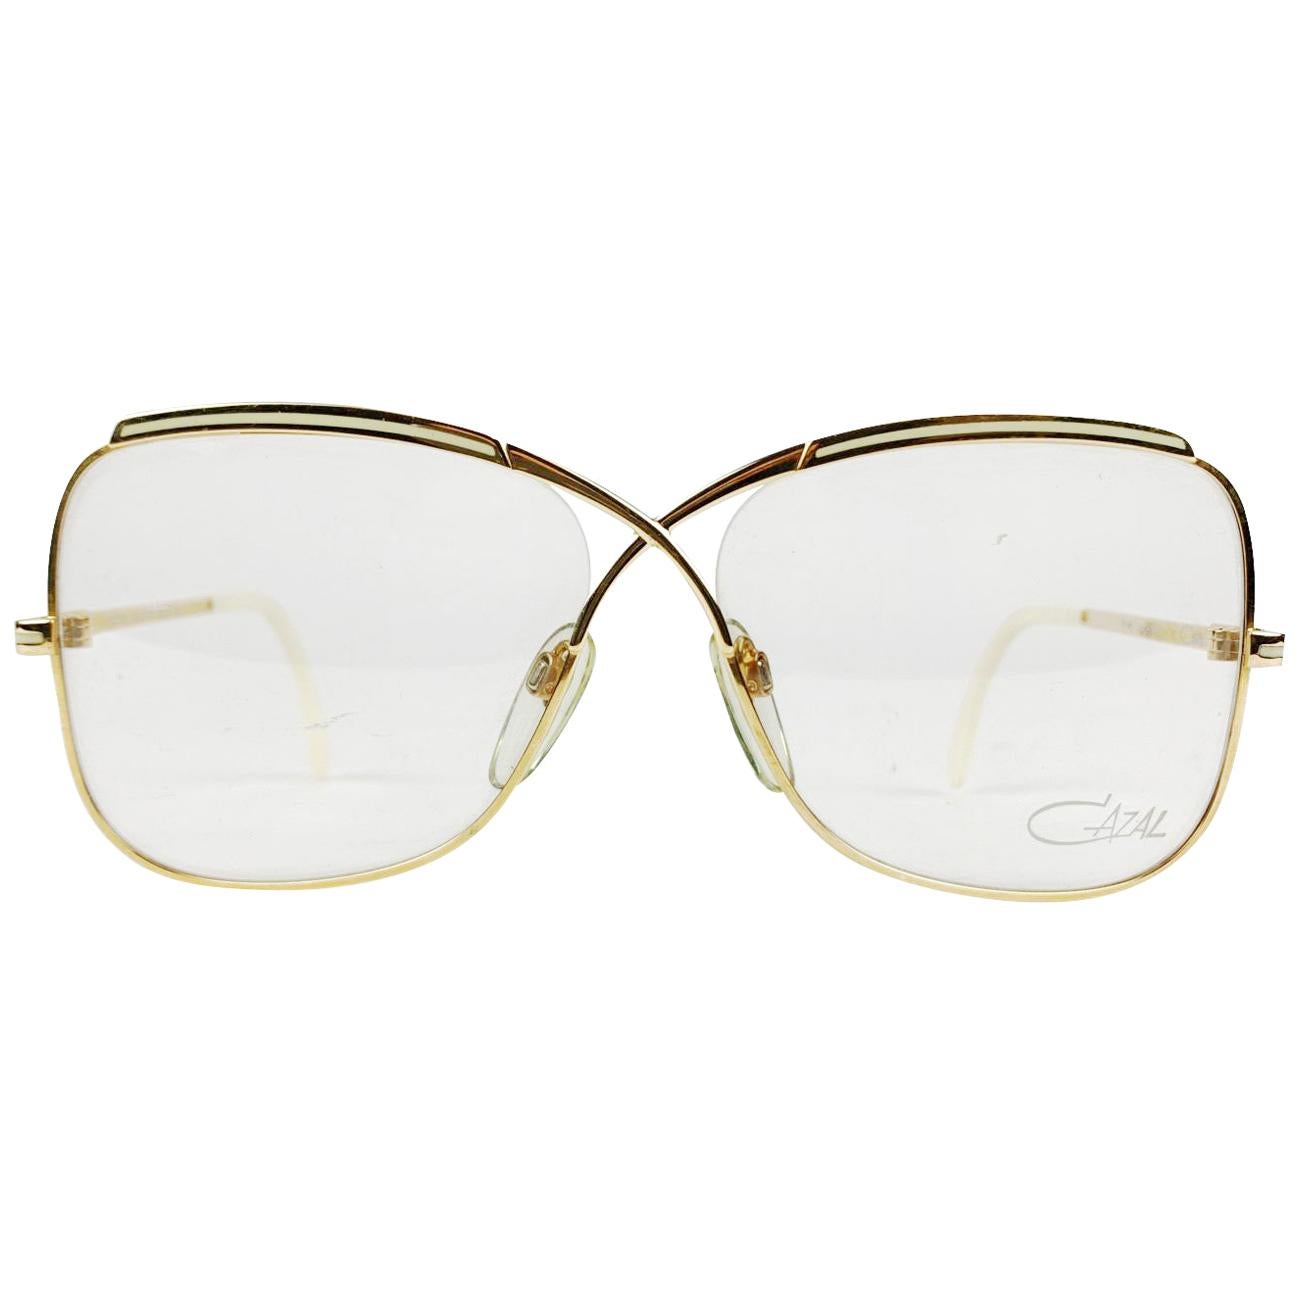 Cazal Vintage Eyeglasses 224 Ivory 57/14 130 mm West Germany